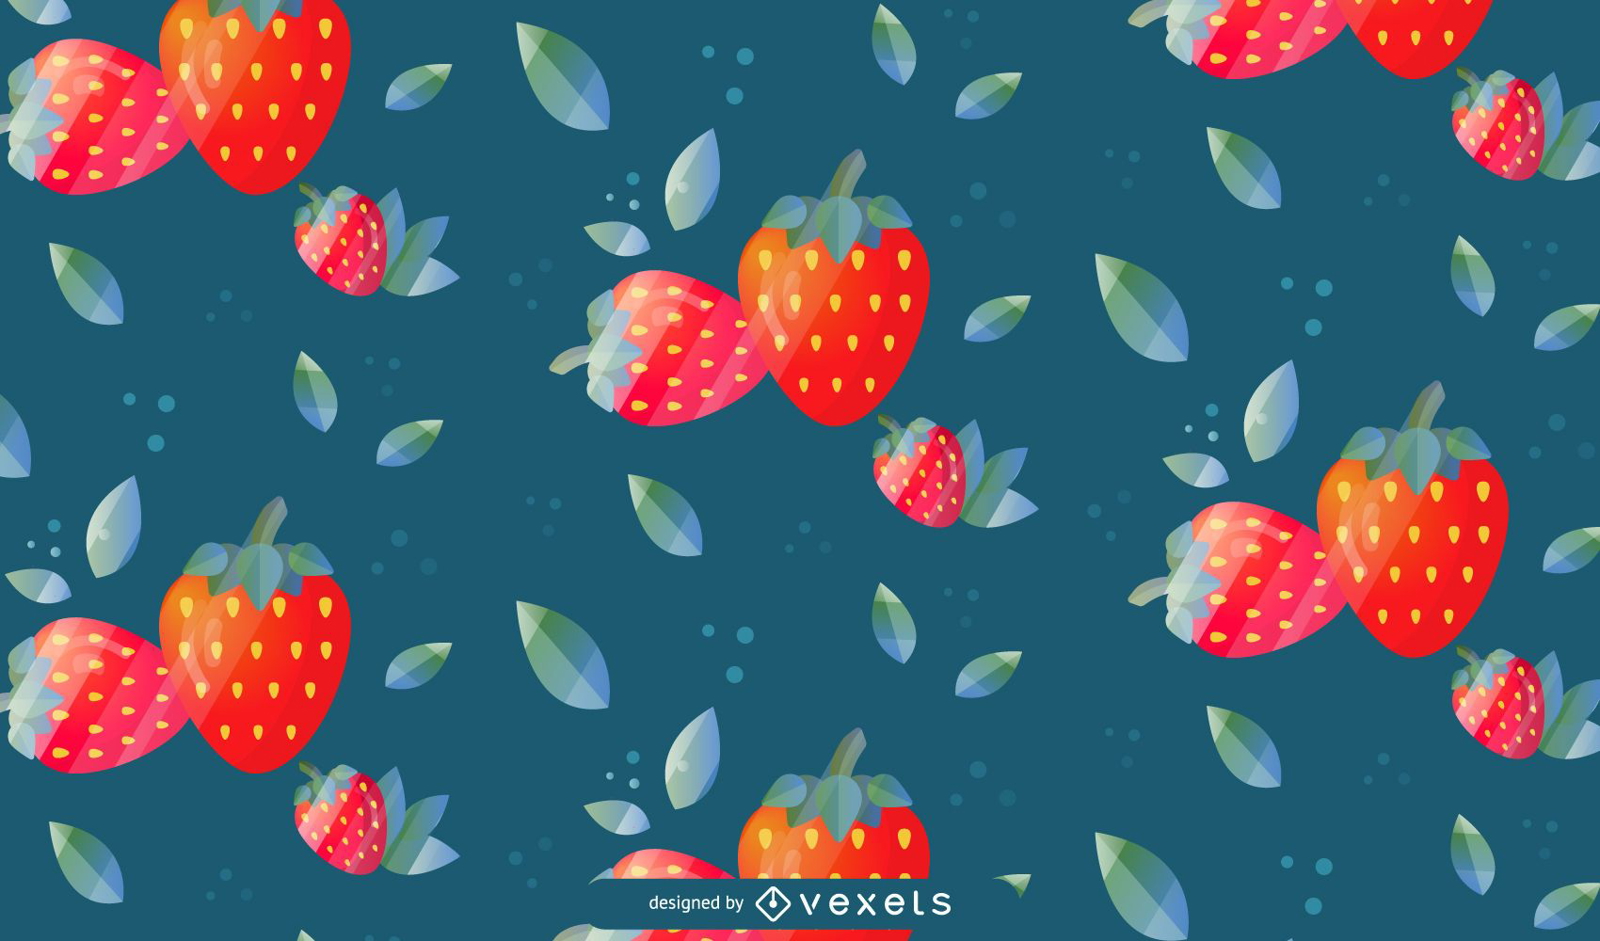 Erdbeermuster-Hintergrunddesign